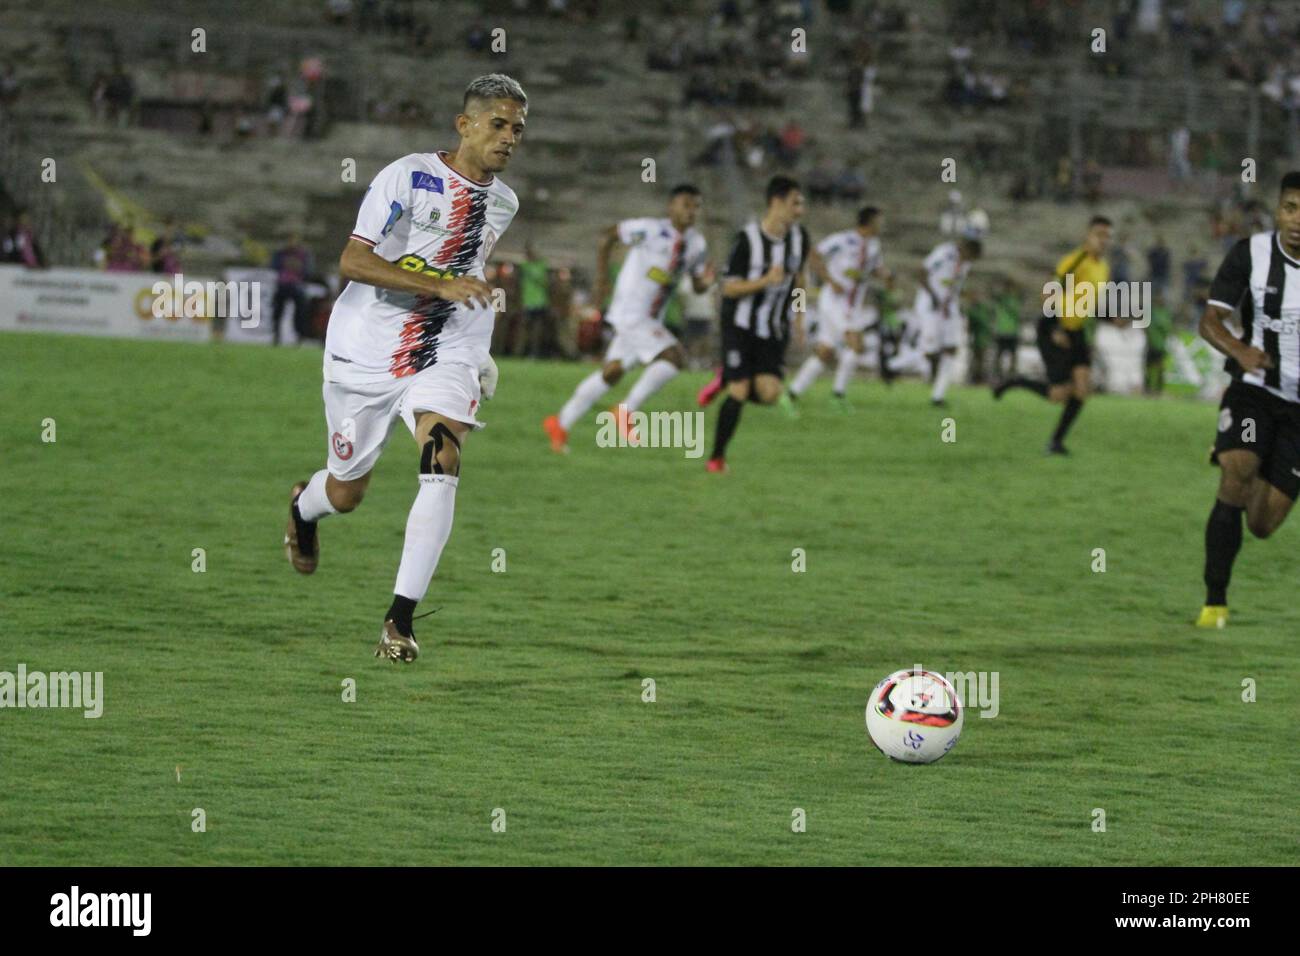 SP - Sao Paulo - 03/26/2022 - PAULISTA 2022, PALMEIRAS X BRAGANTINO - Rony  Palmeiras player during a